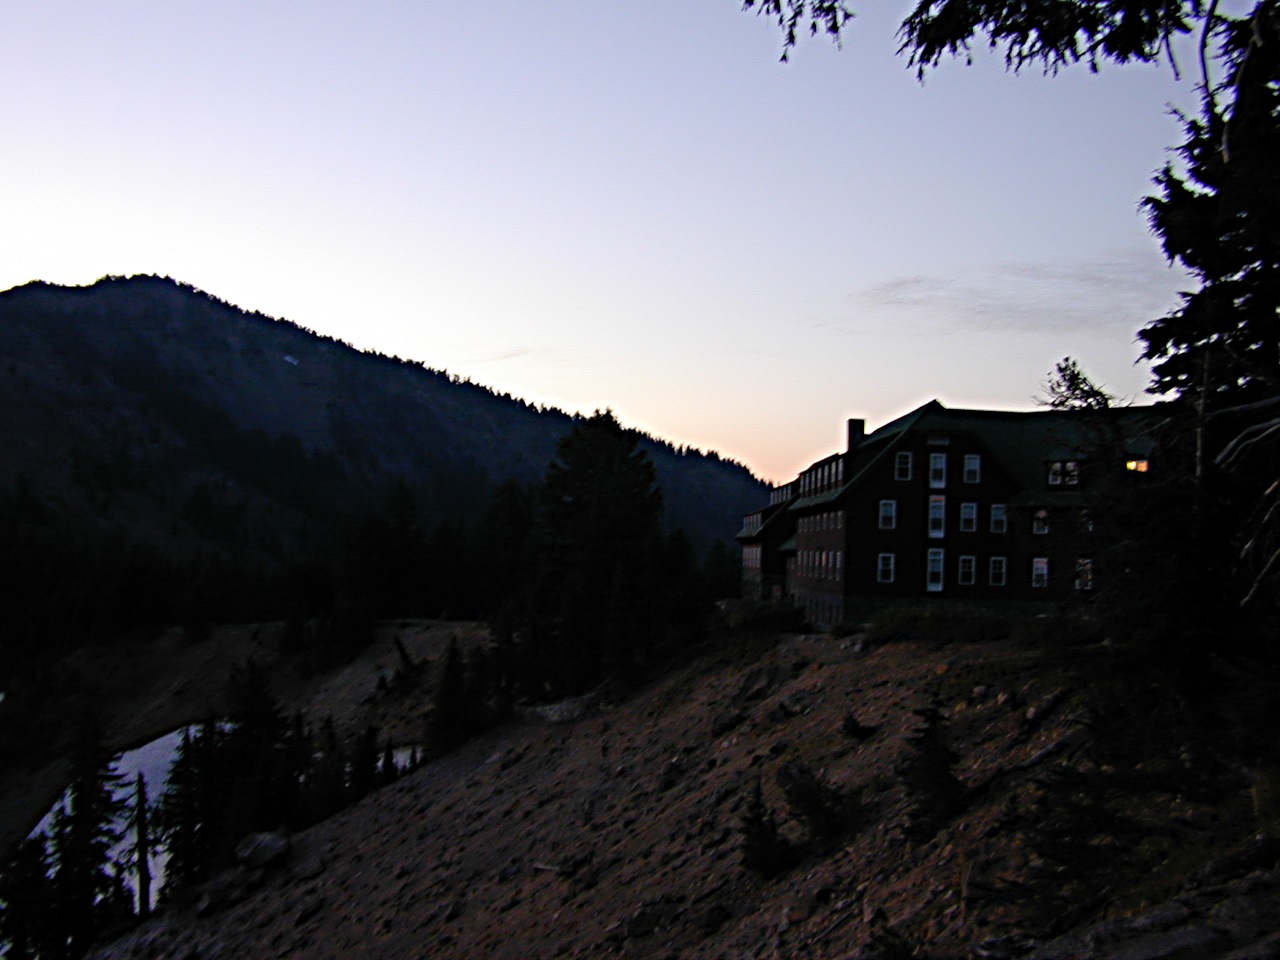 Garfield Peak and the Lodge